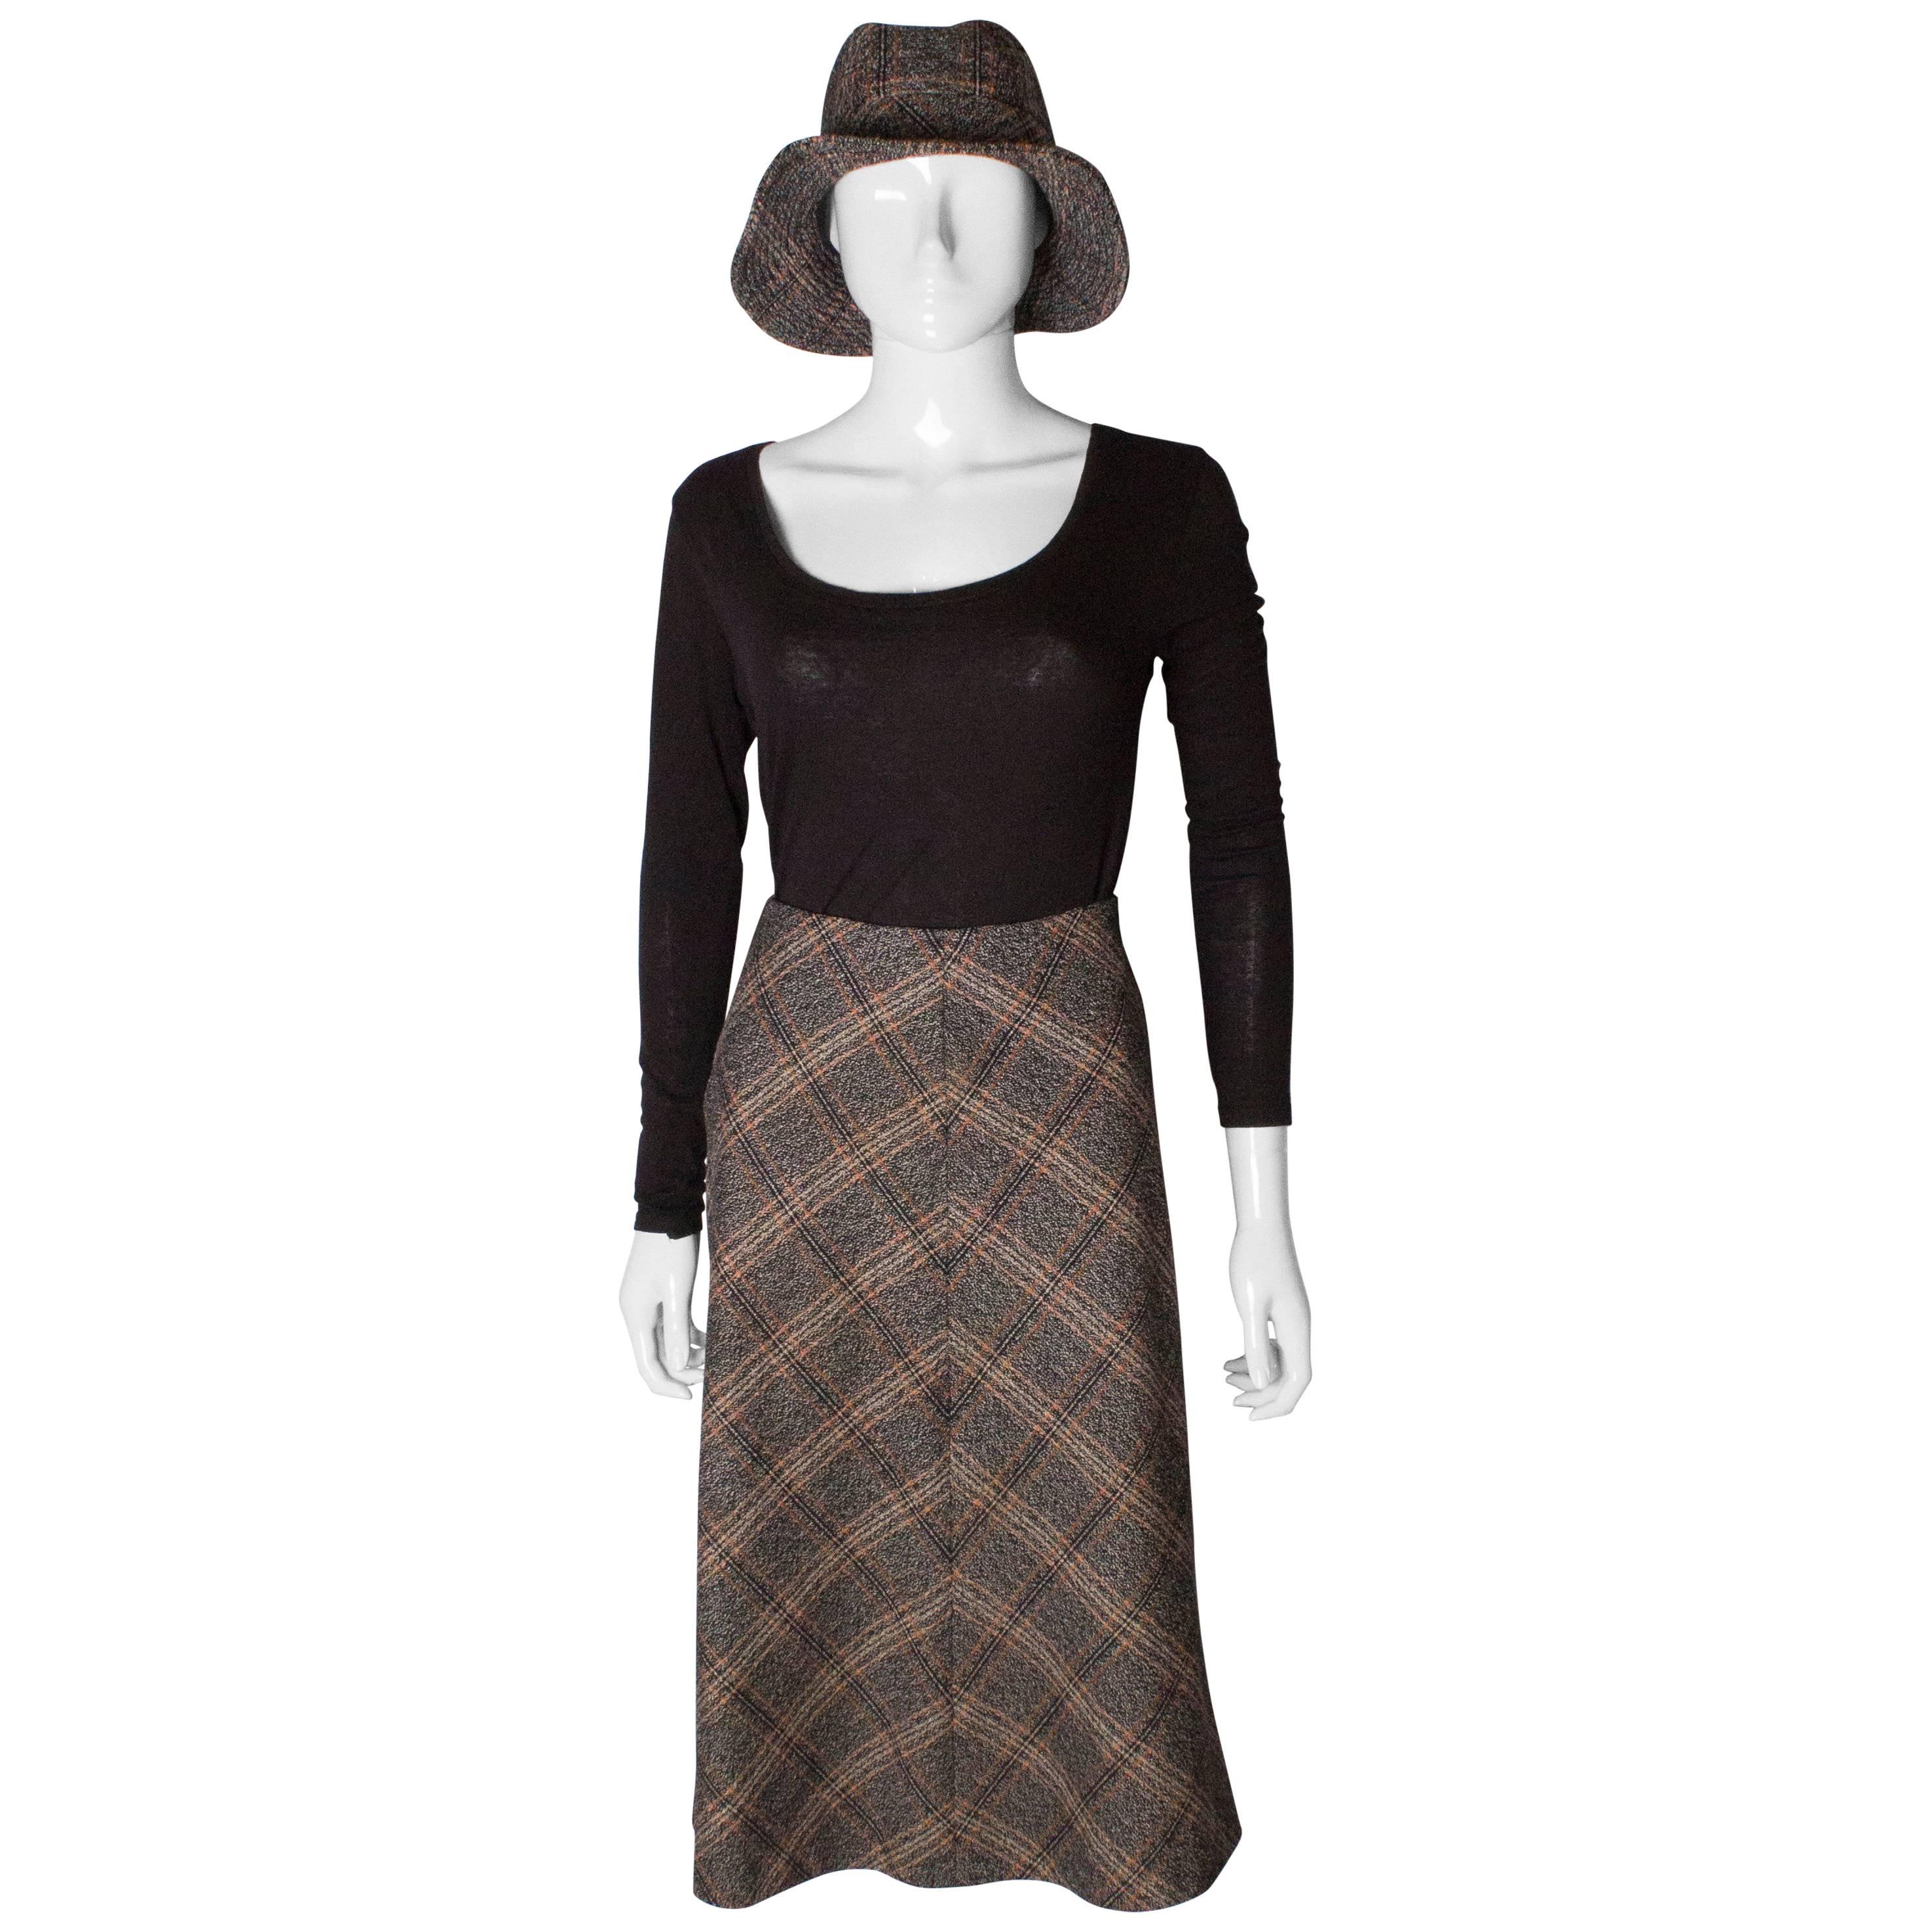 Biba Vintage Skirt and Hat